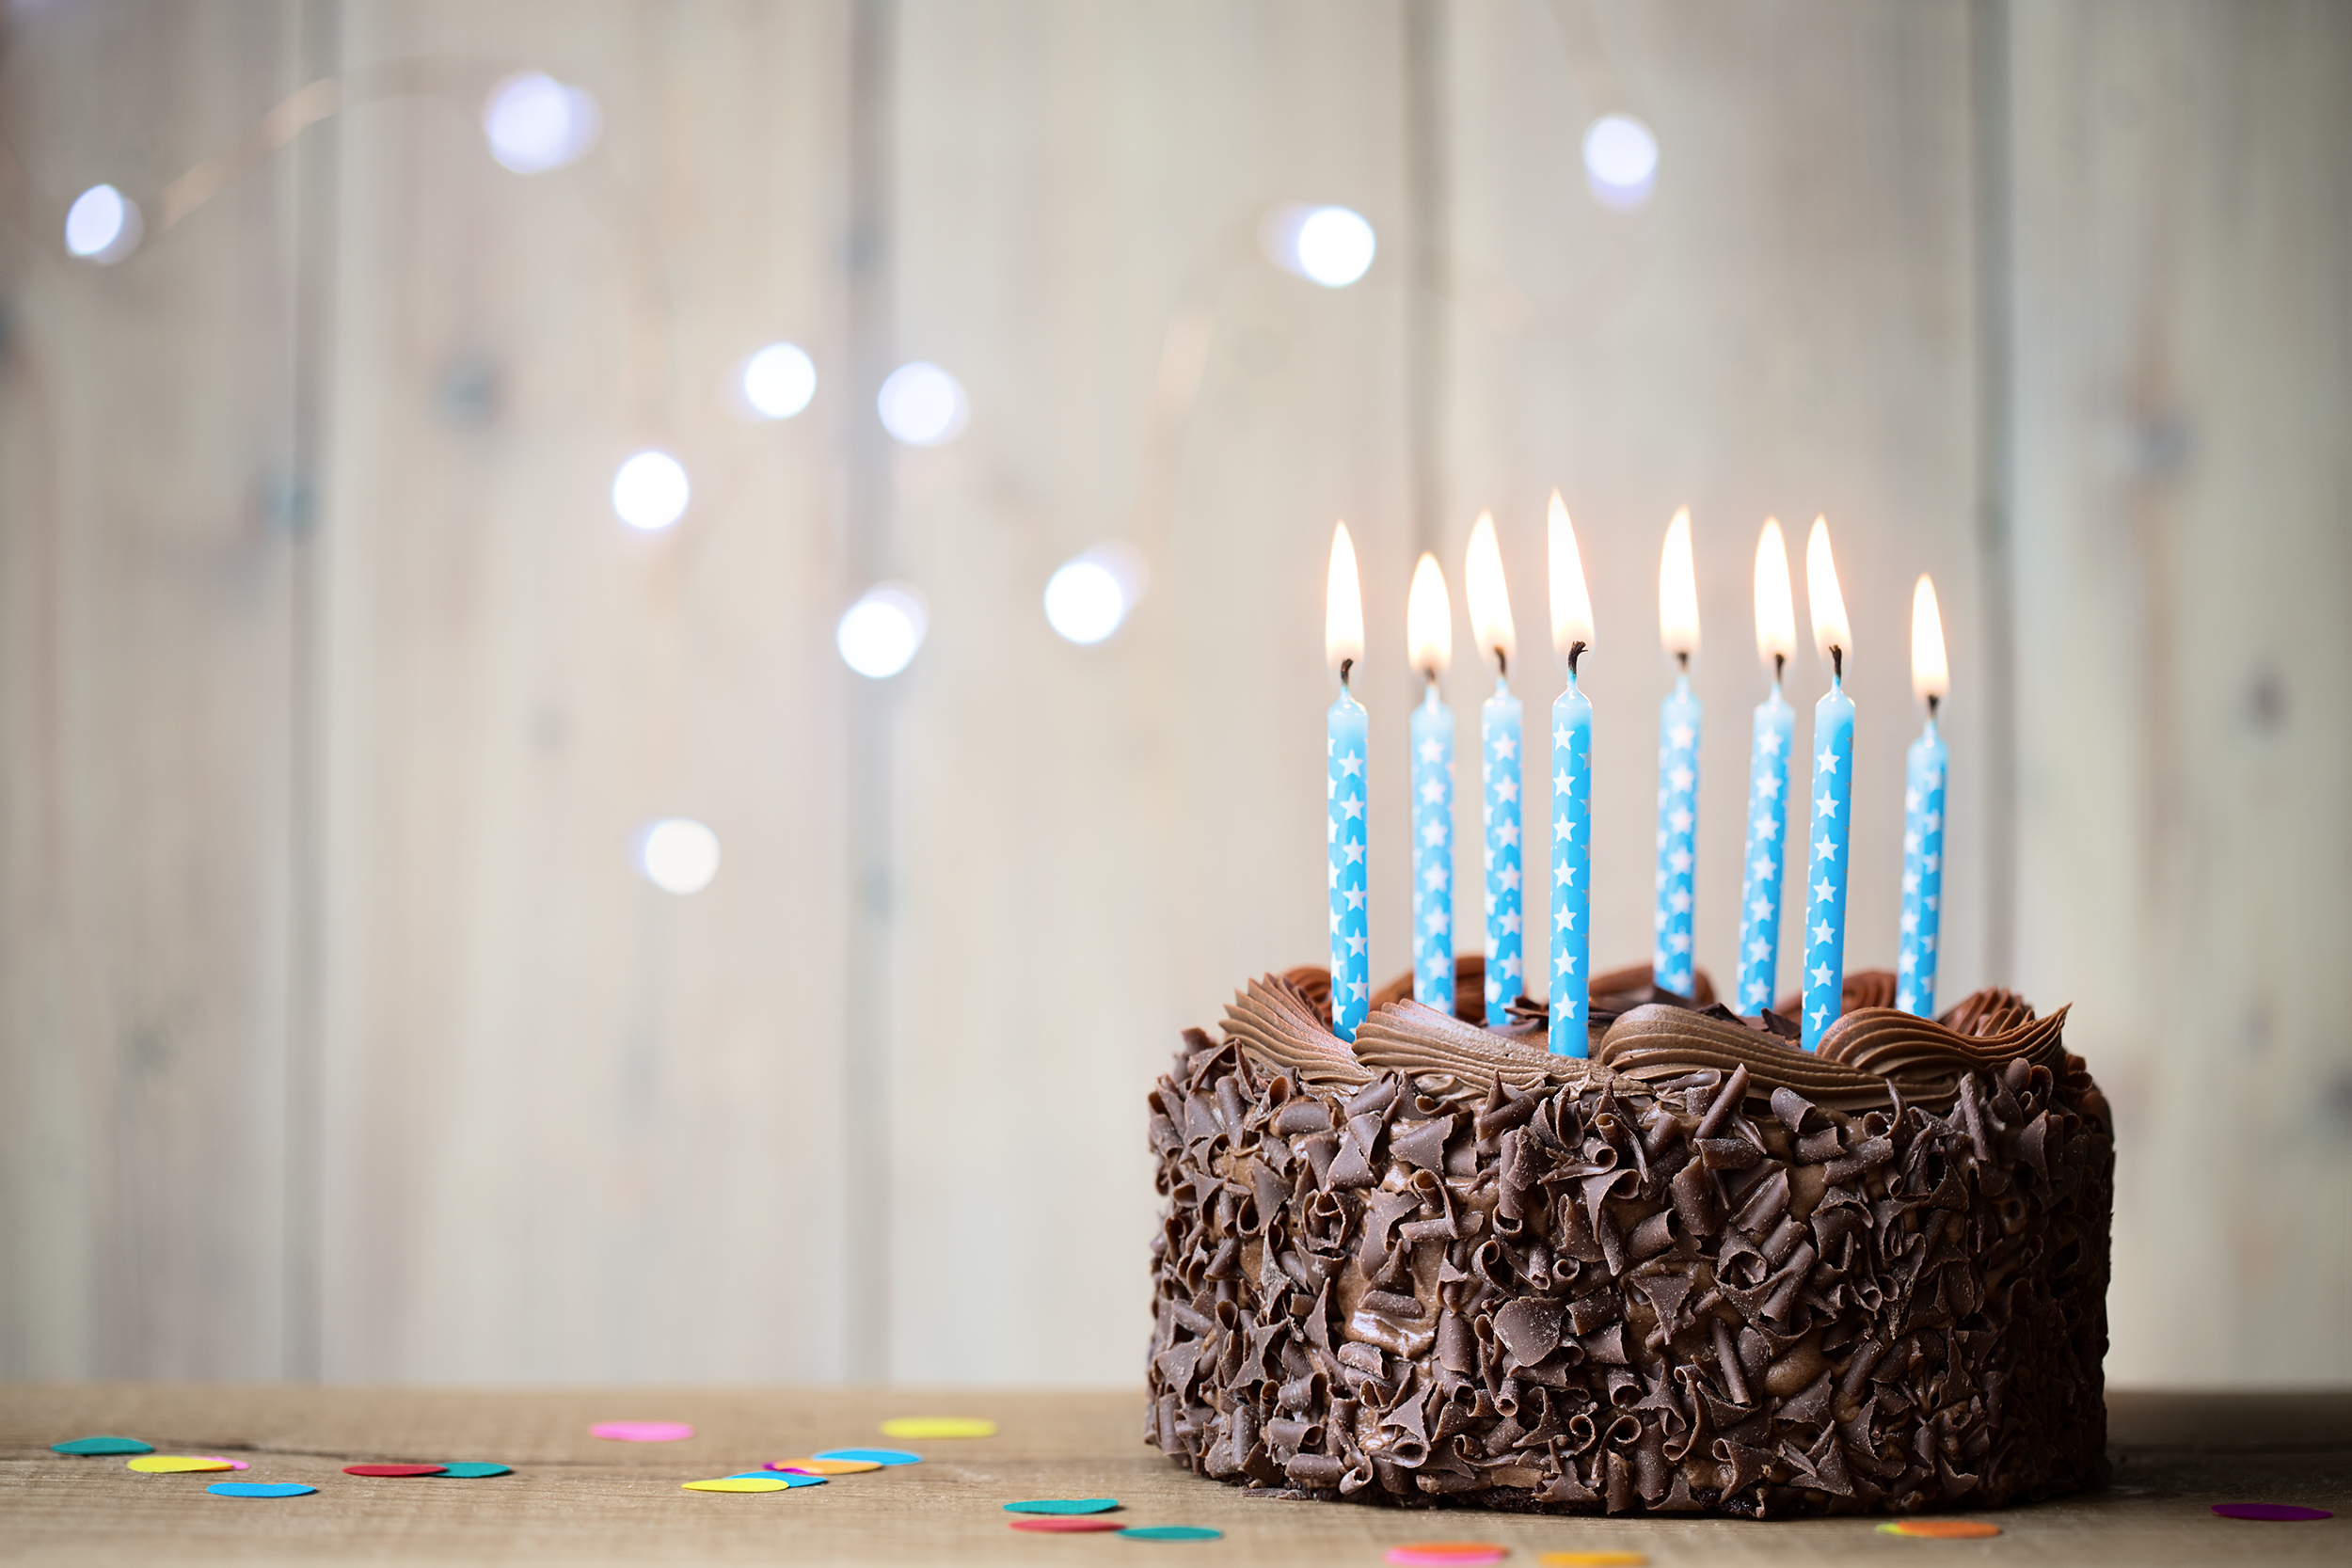 A birthday cake | Source: Shutterstock